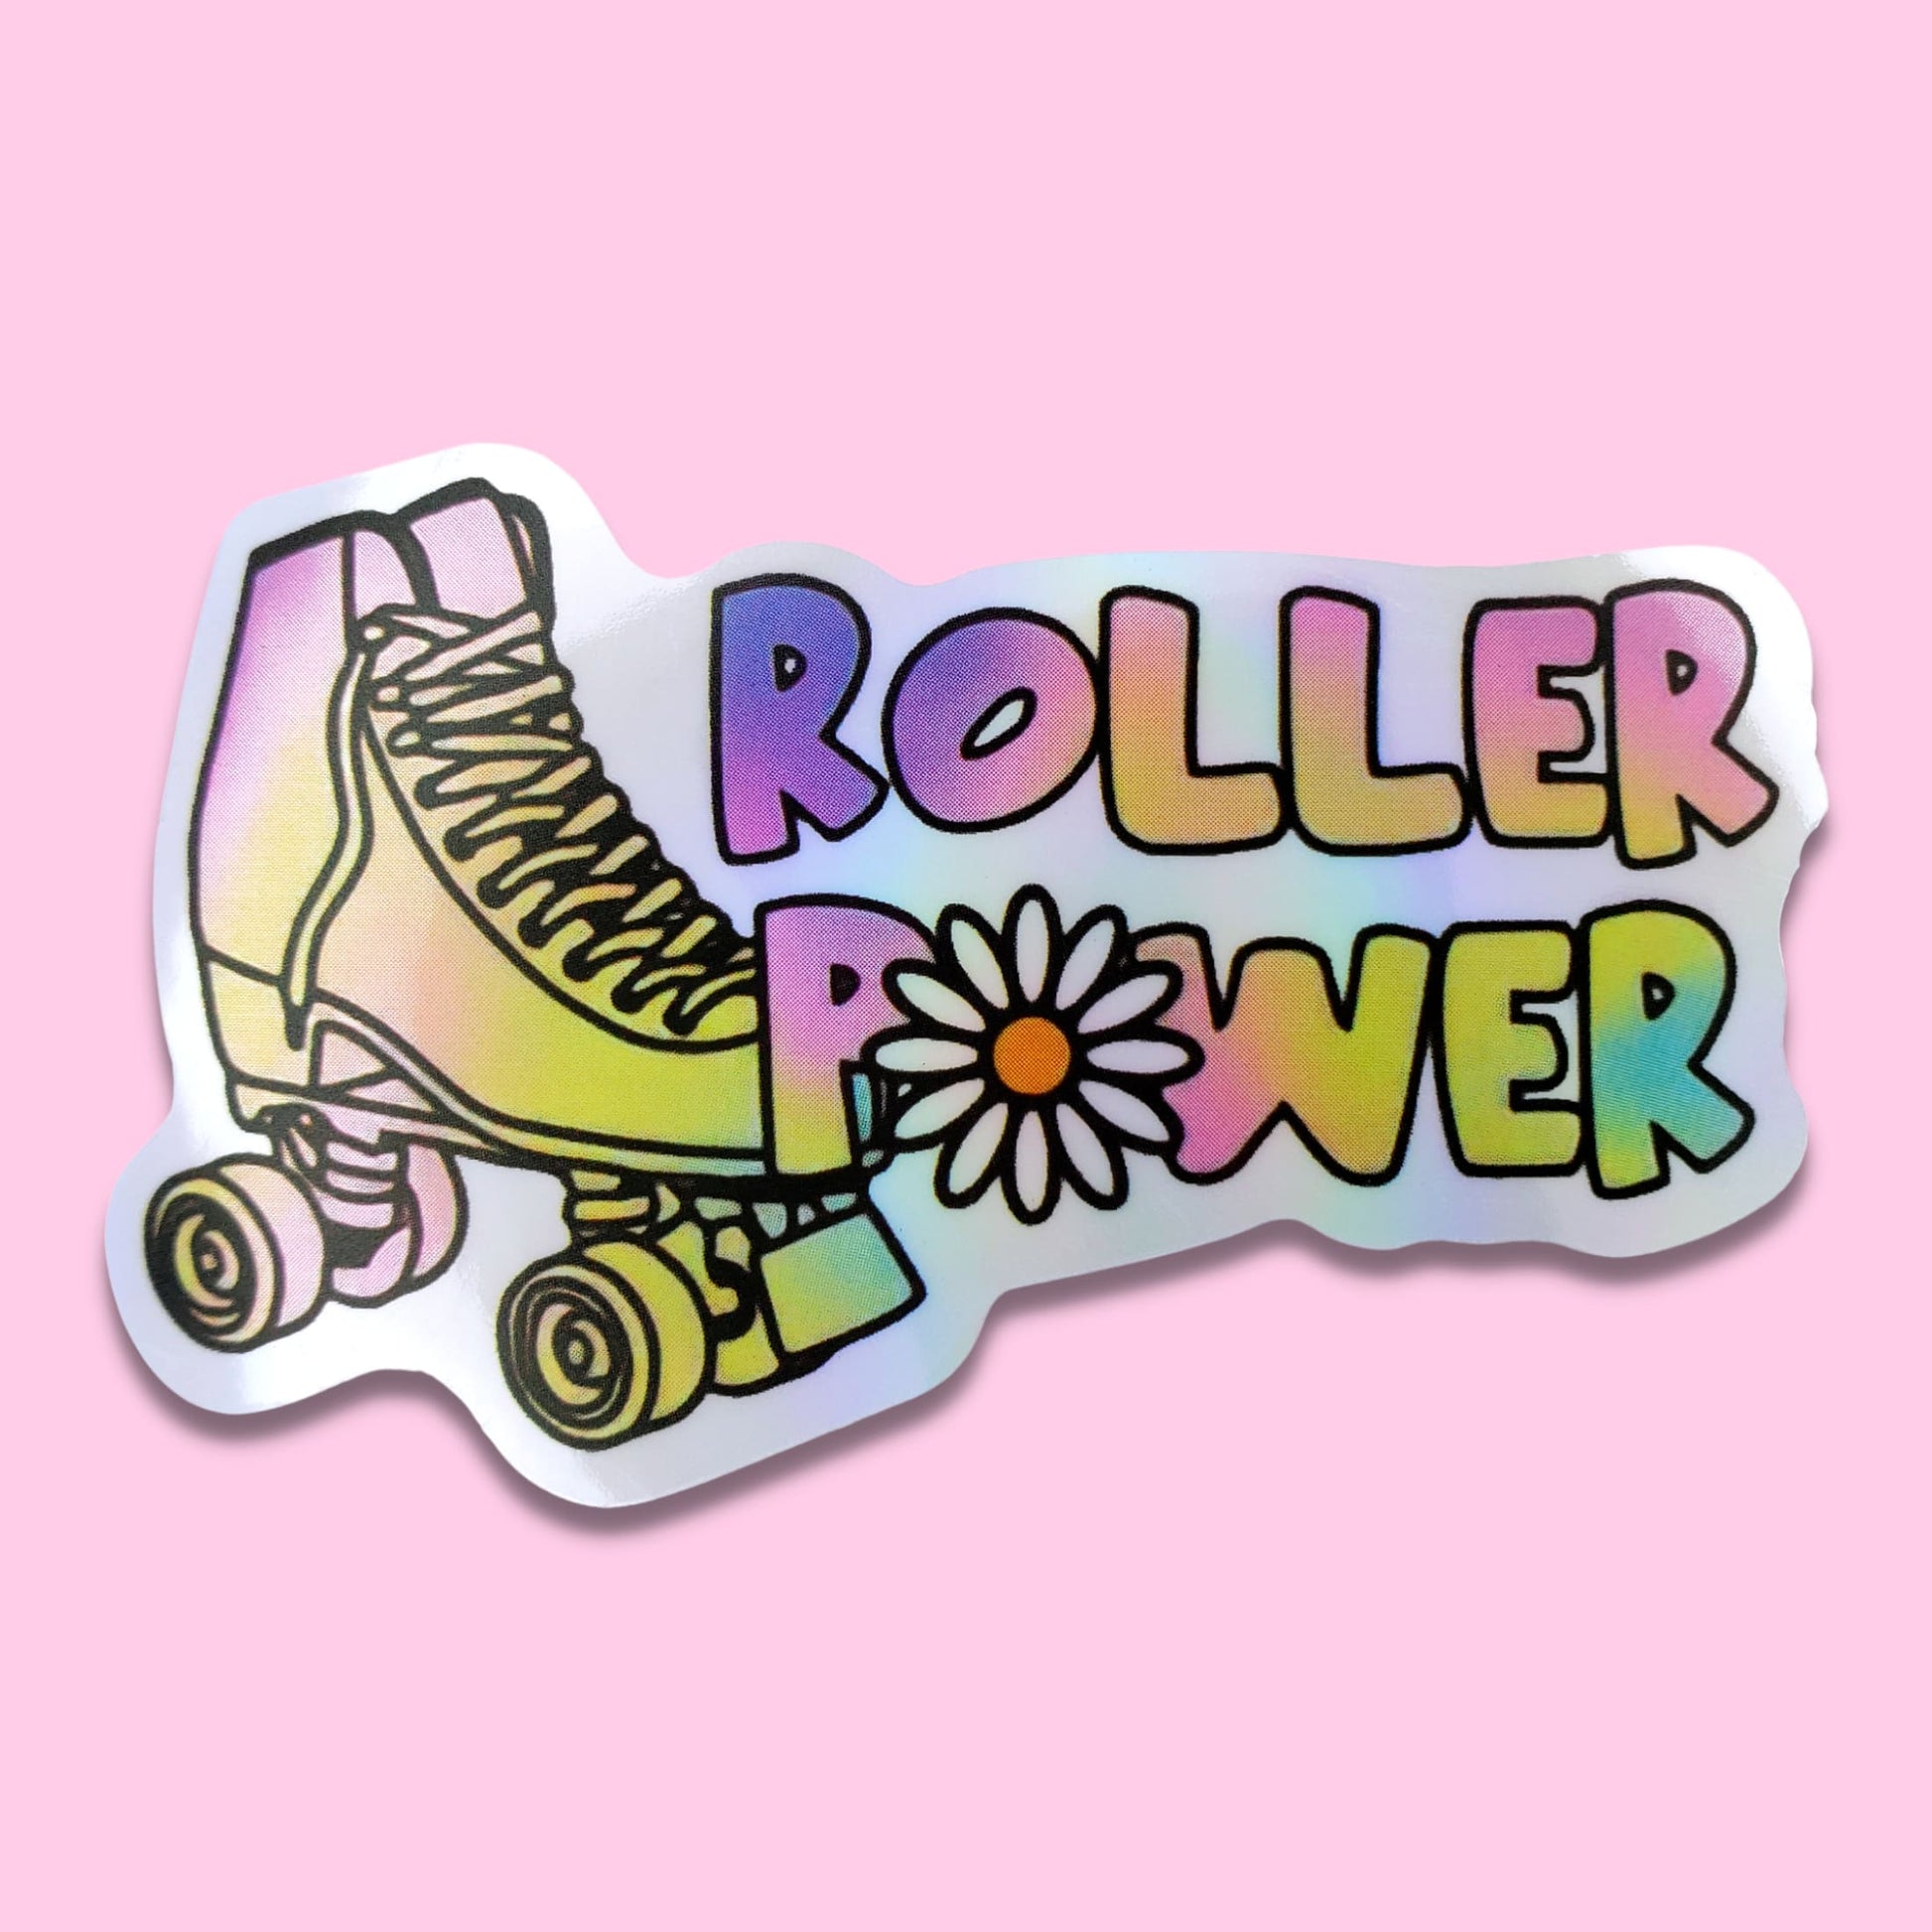 Roller Power Skate Waterproof Holographic Sticker